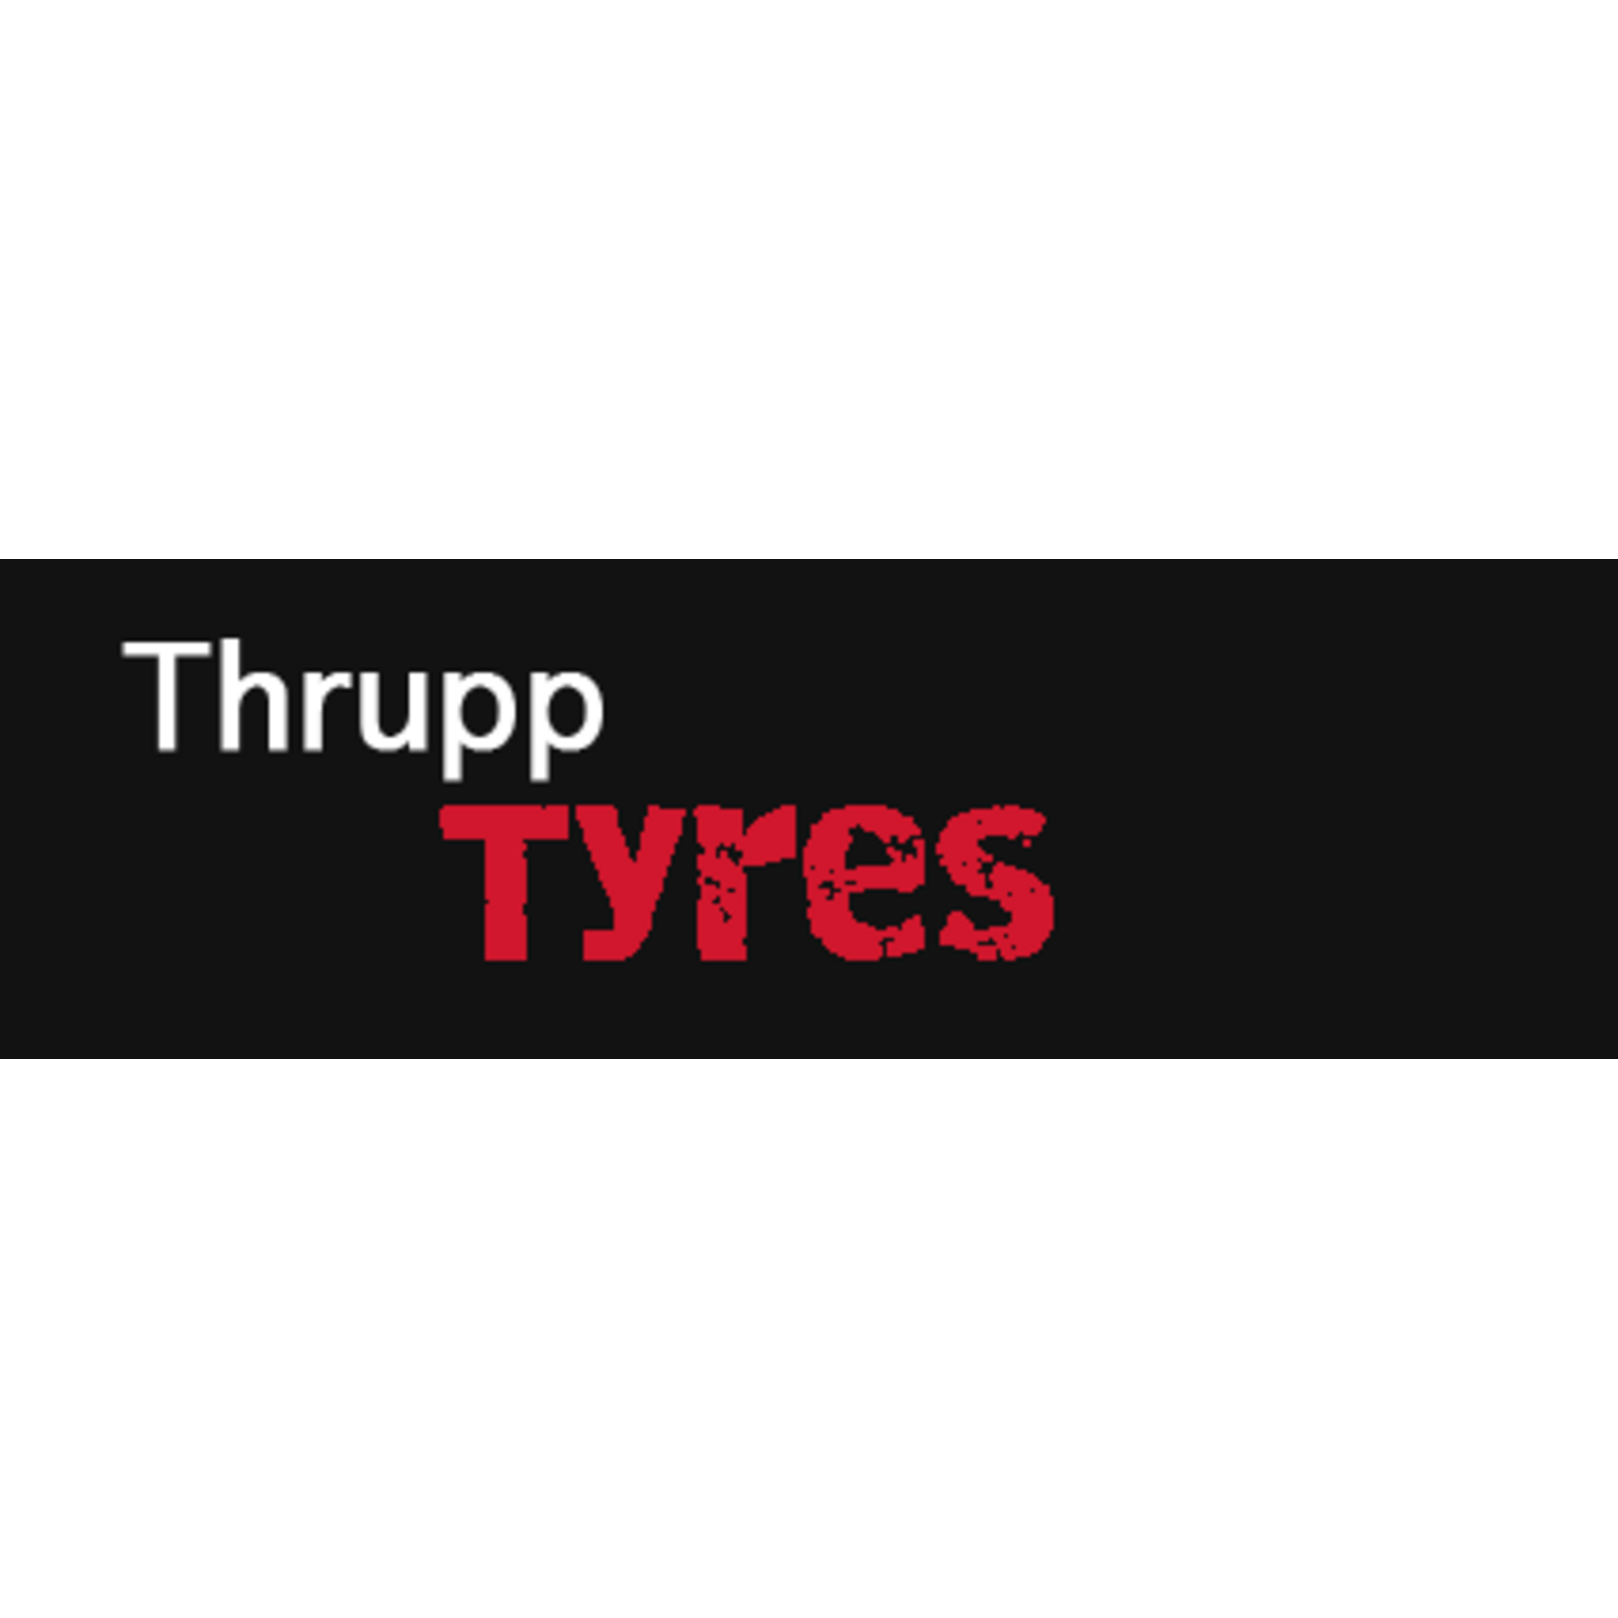 THRUPP TYRES - Stroud, Gloucestershire GL5 2AZ - 01453 885371 | ShowMeLocal.com